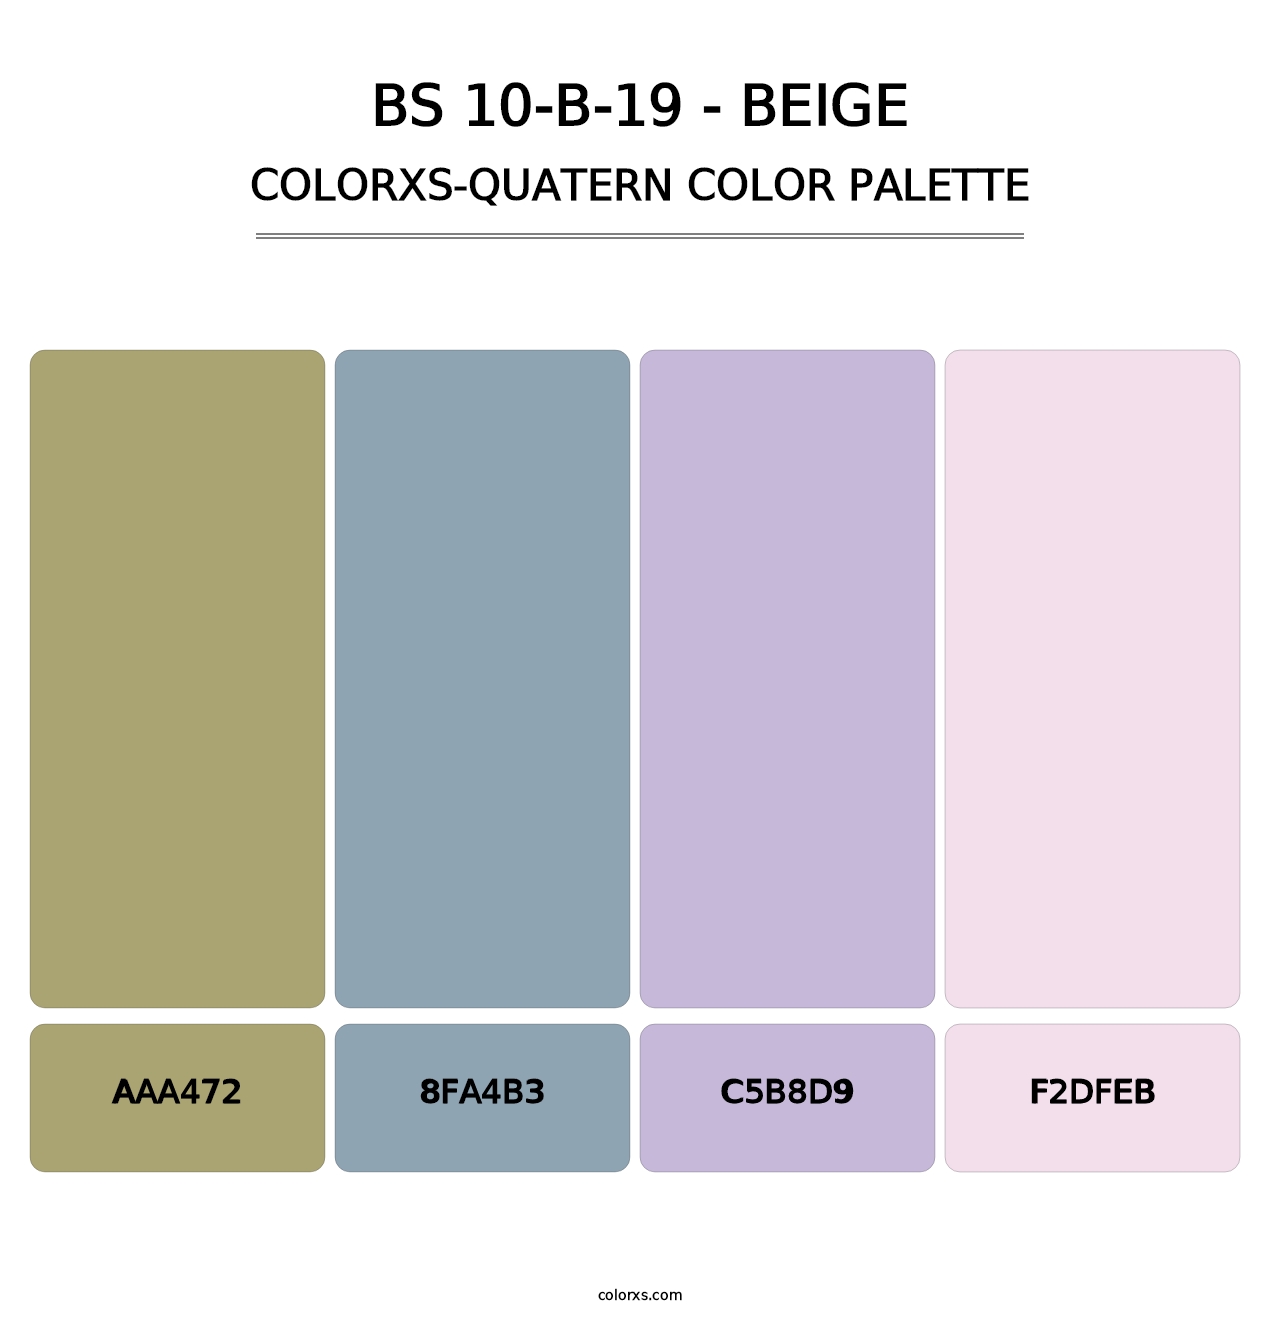 BS 10-B-19 - Beige - Colorxs Quatern Palette